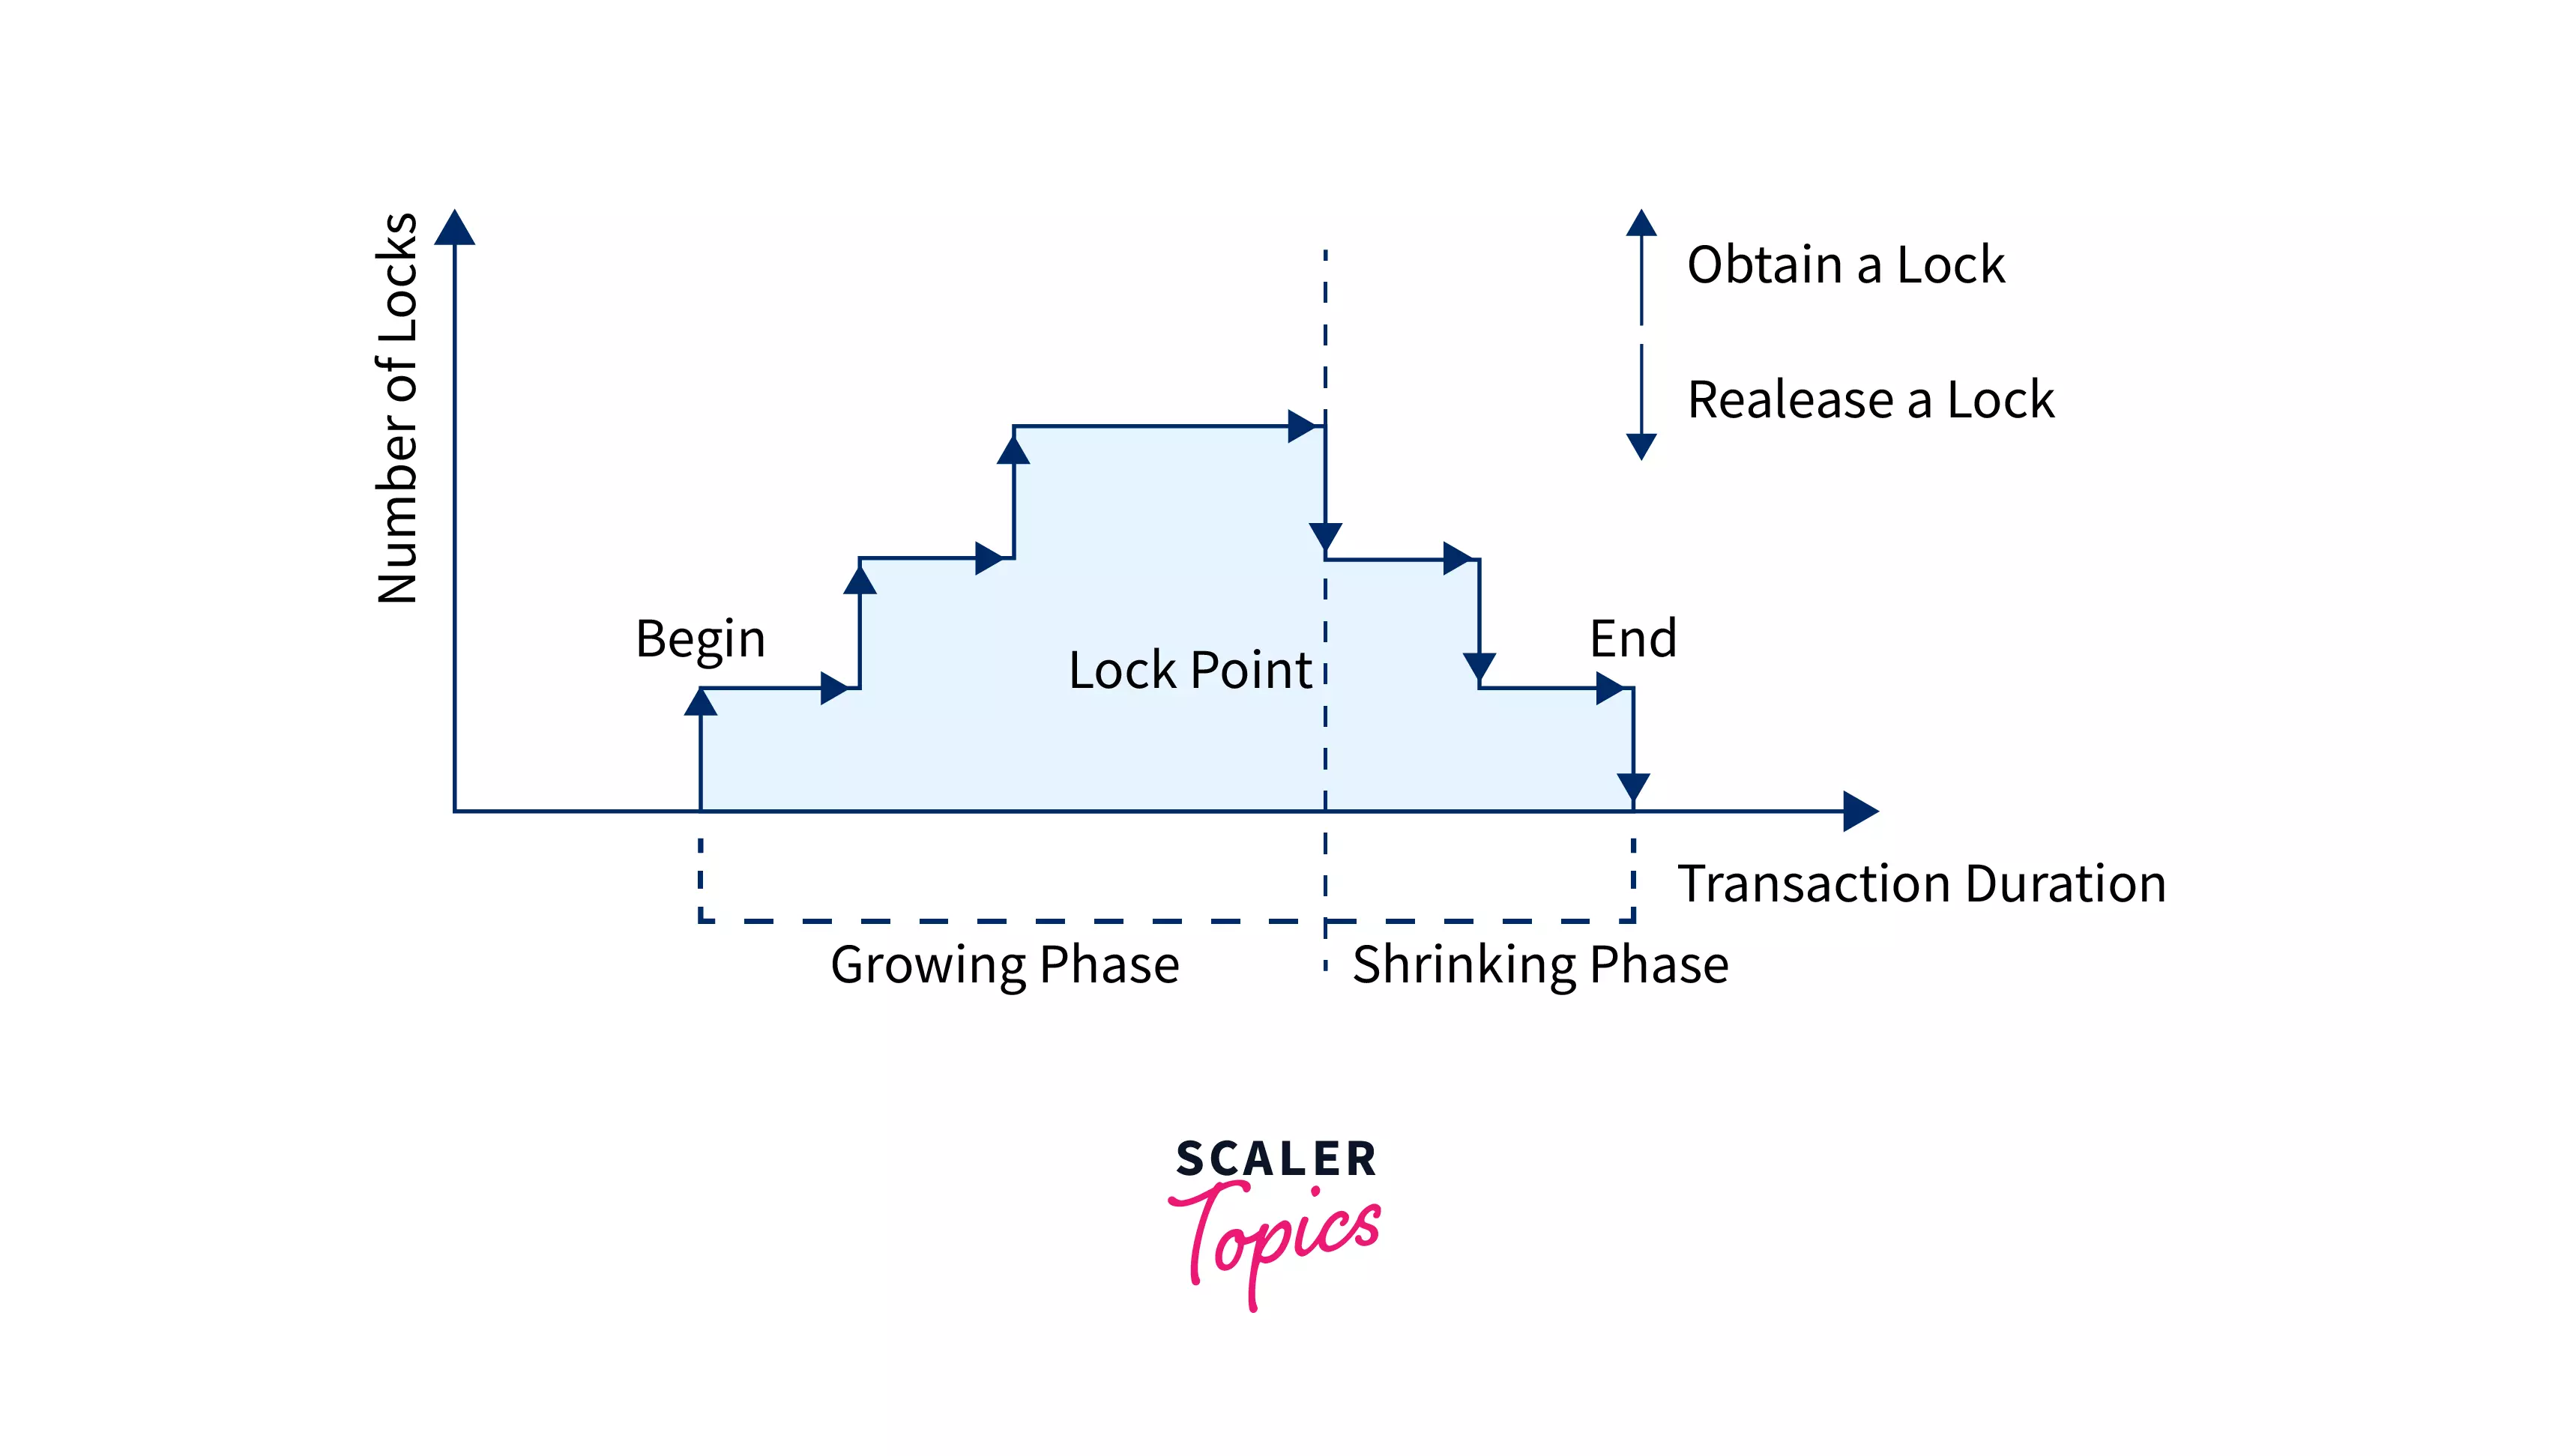 Two-phase Locking Protocol